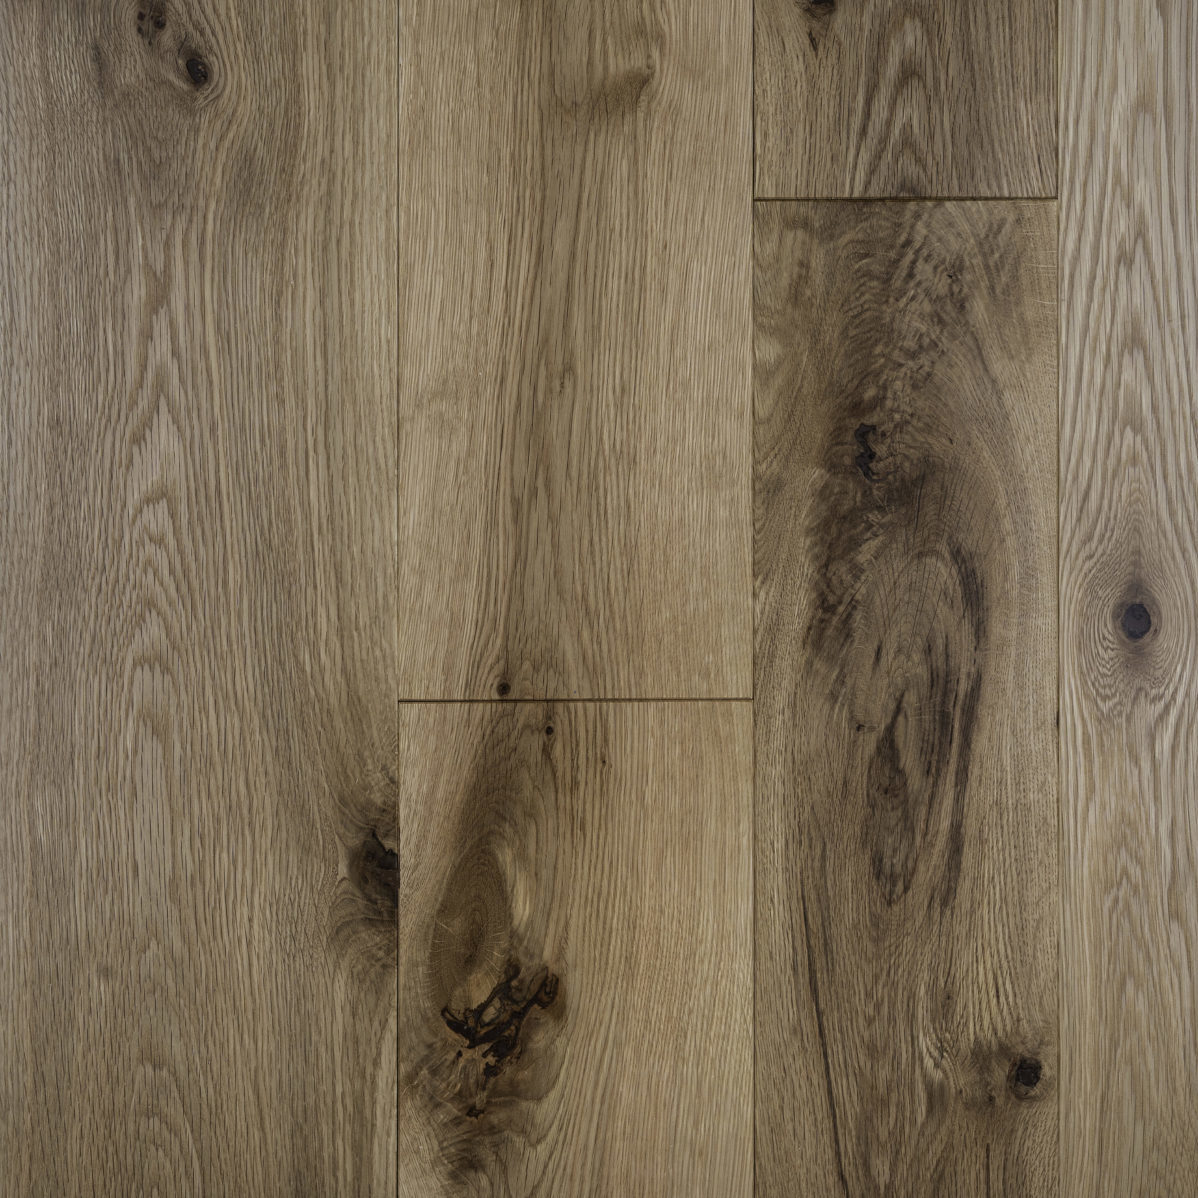 Wide Plank White Oak Flooring Broad, Character Grade White Oak Hardwood Flooring